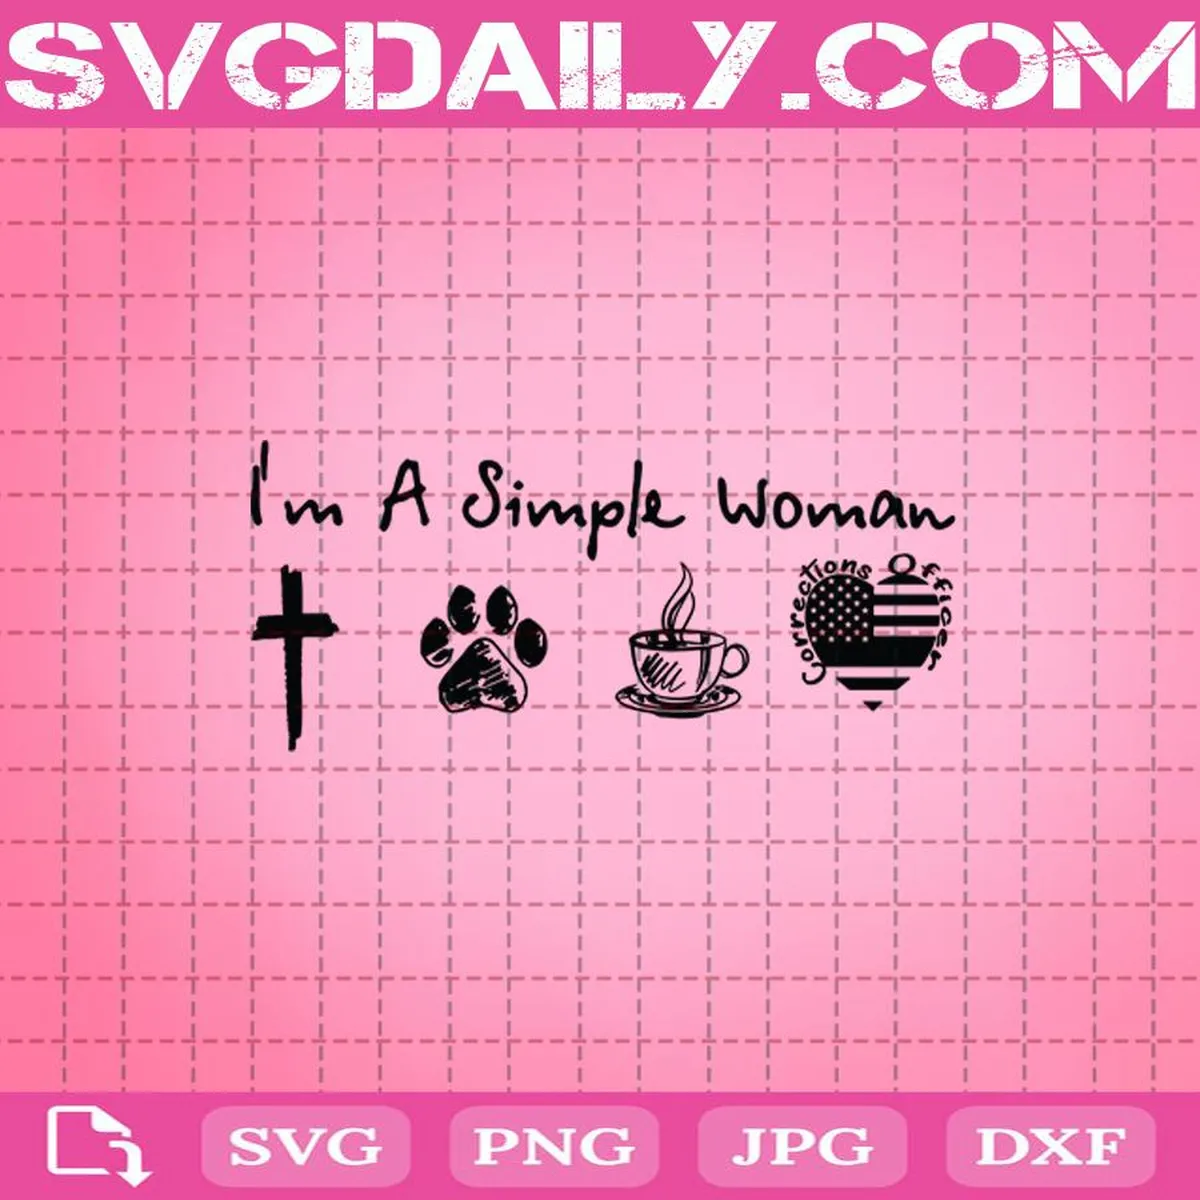 I'm A Simple Woman Svg, Jesus Svg, Dog Svg, Coffe Svg, Corrections Officer Svg, Svg Png Dxf Eps AI Instant Download